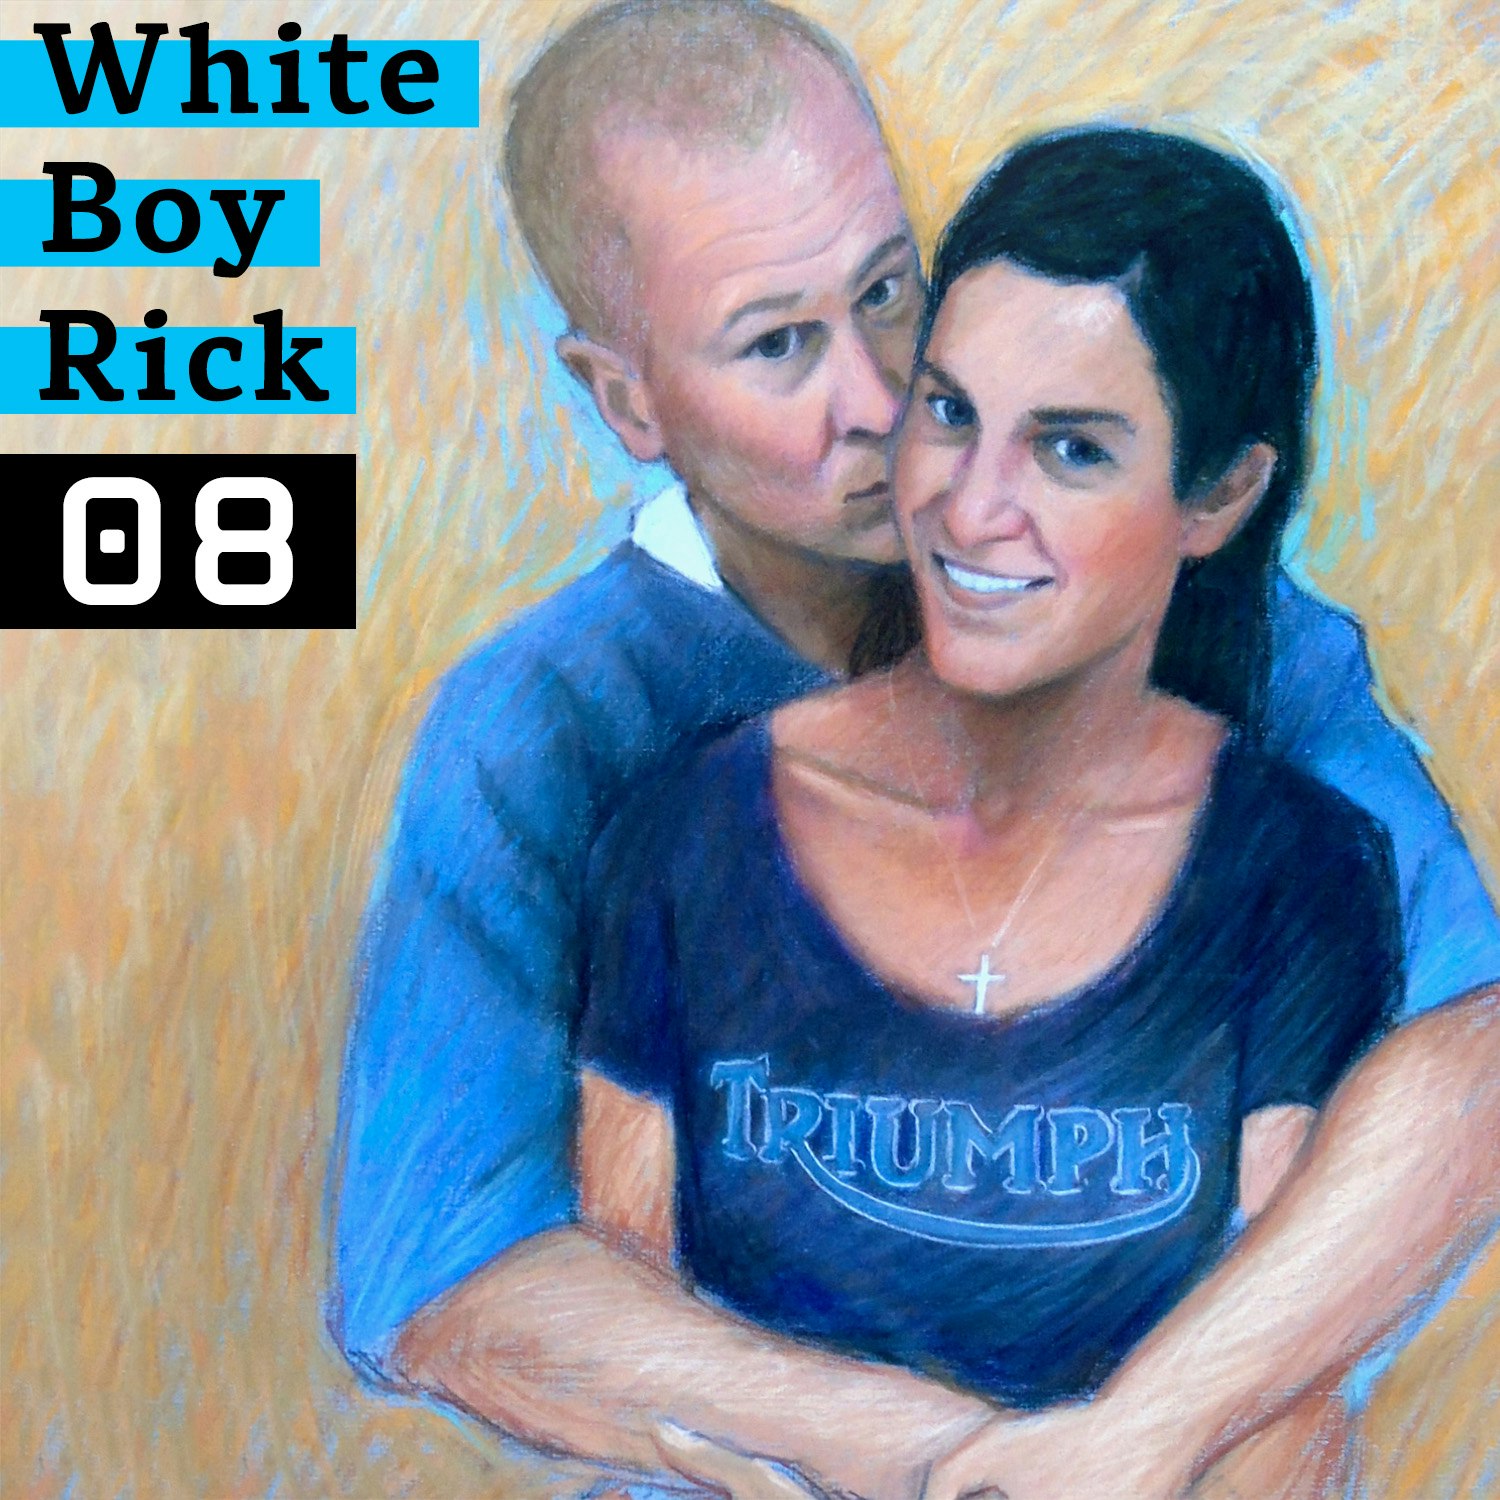 White Boy Rick, Chapter 8 – Just Call Me Rick